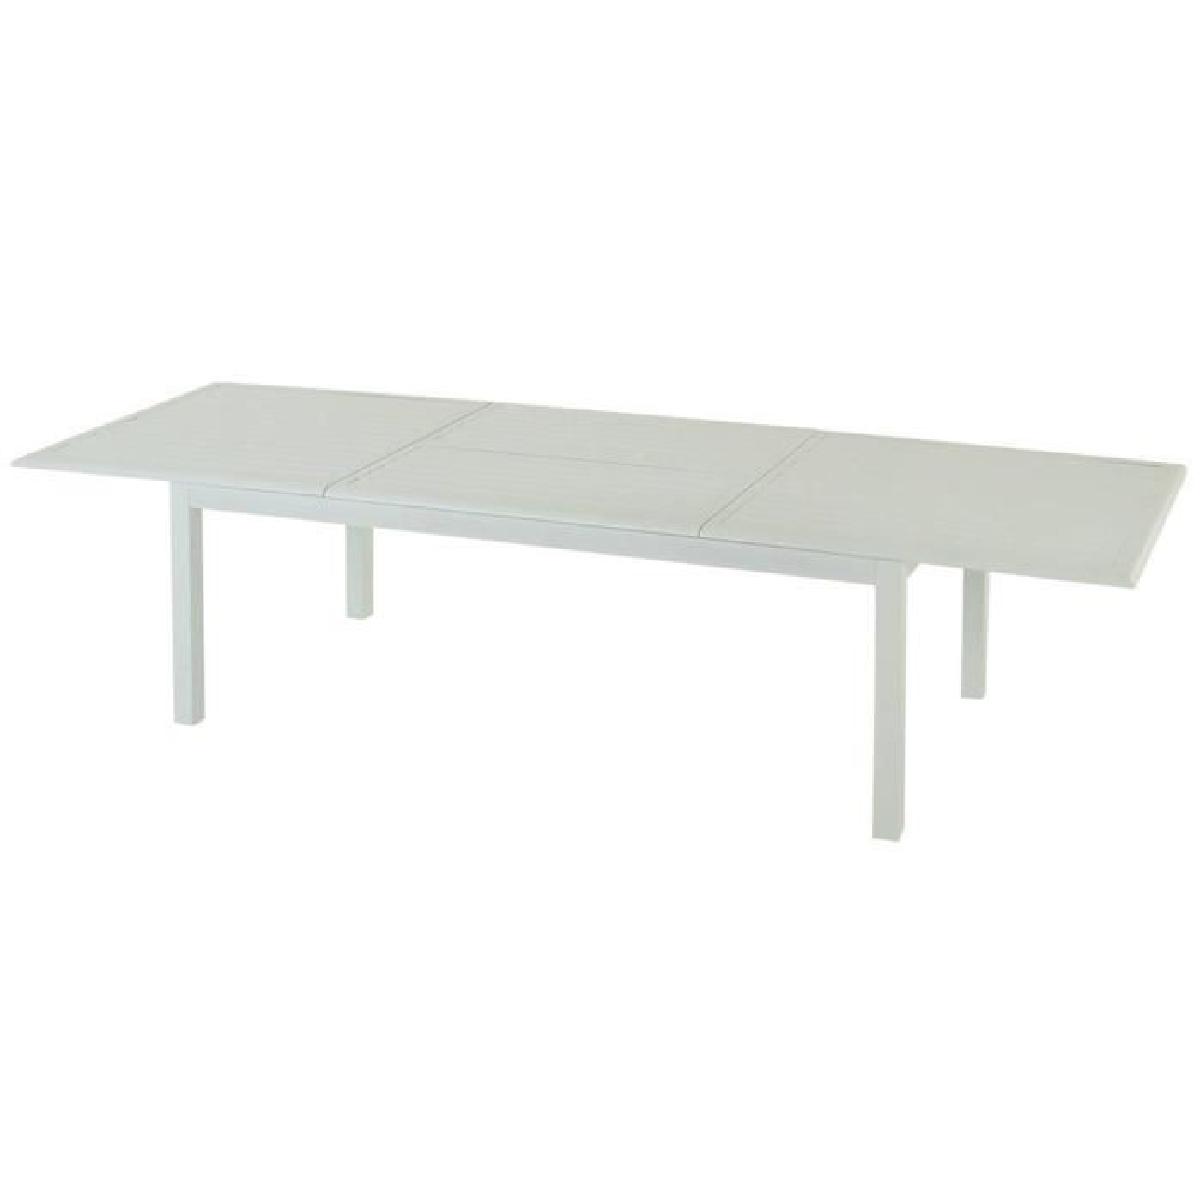 / Vente table de jardin Table extensible coloris blanc